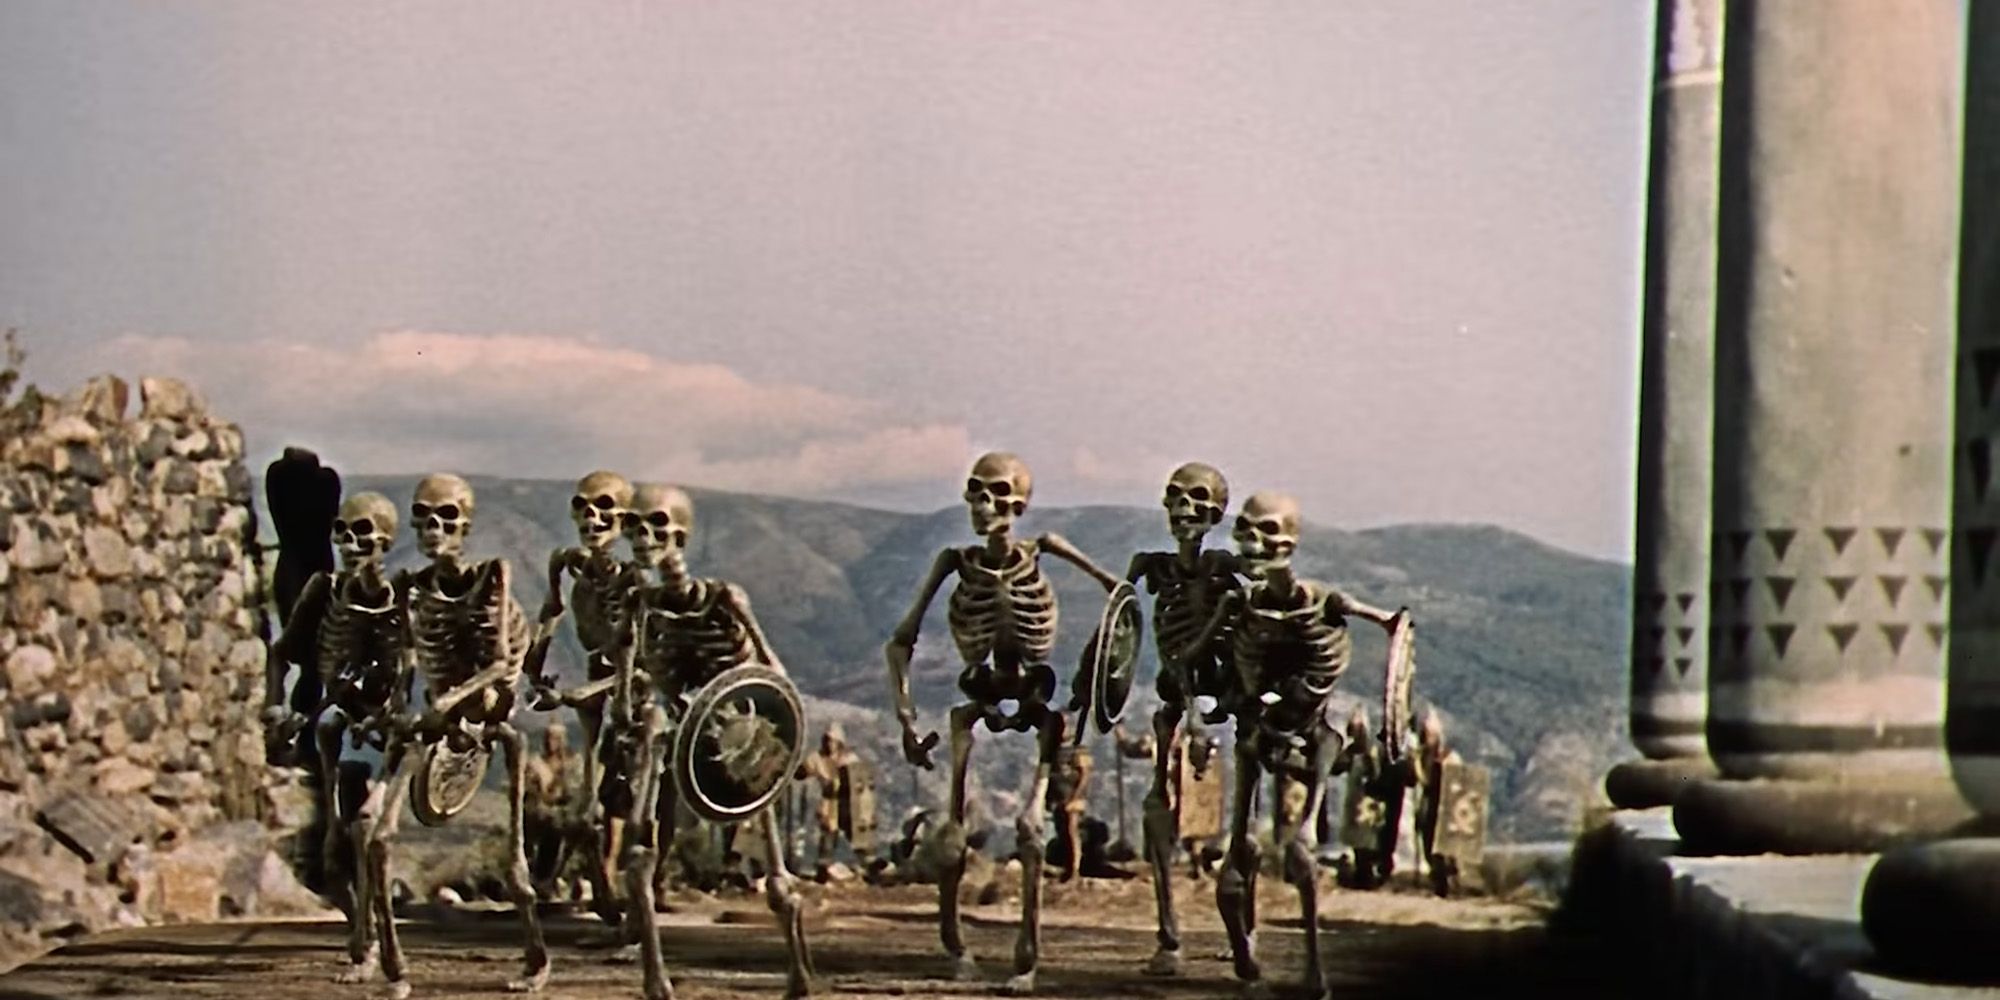 Jason and the Argonauts, Skeletons Fight